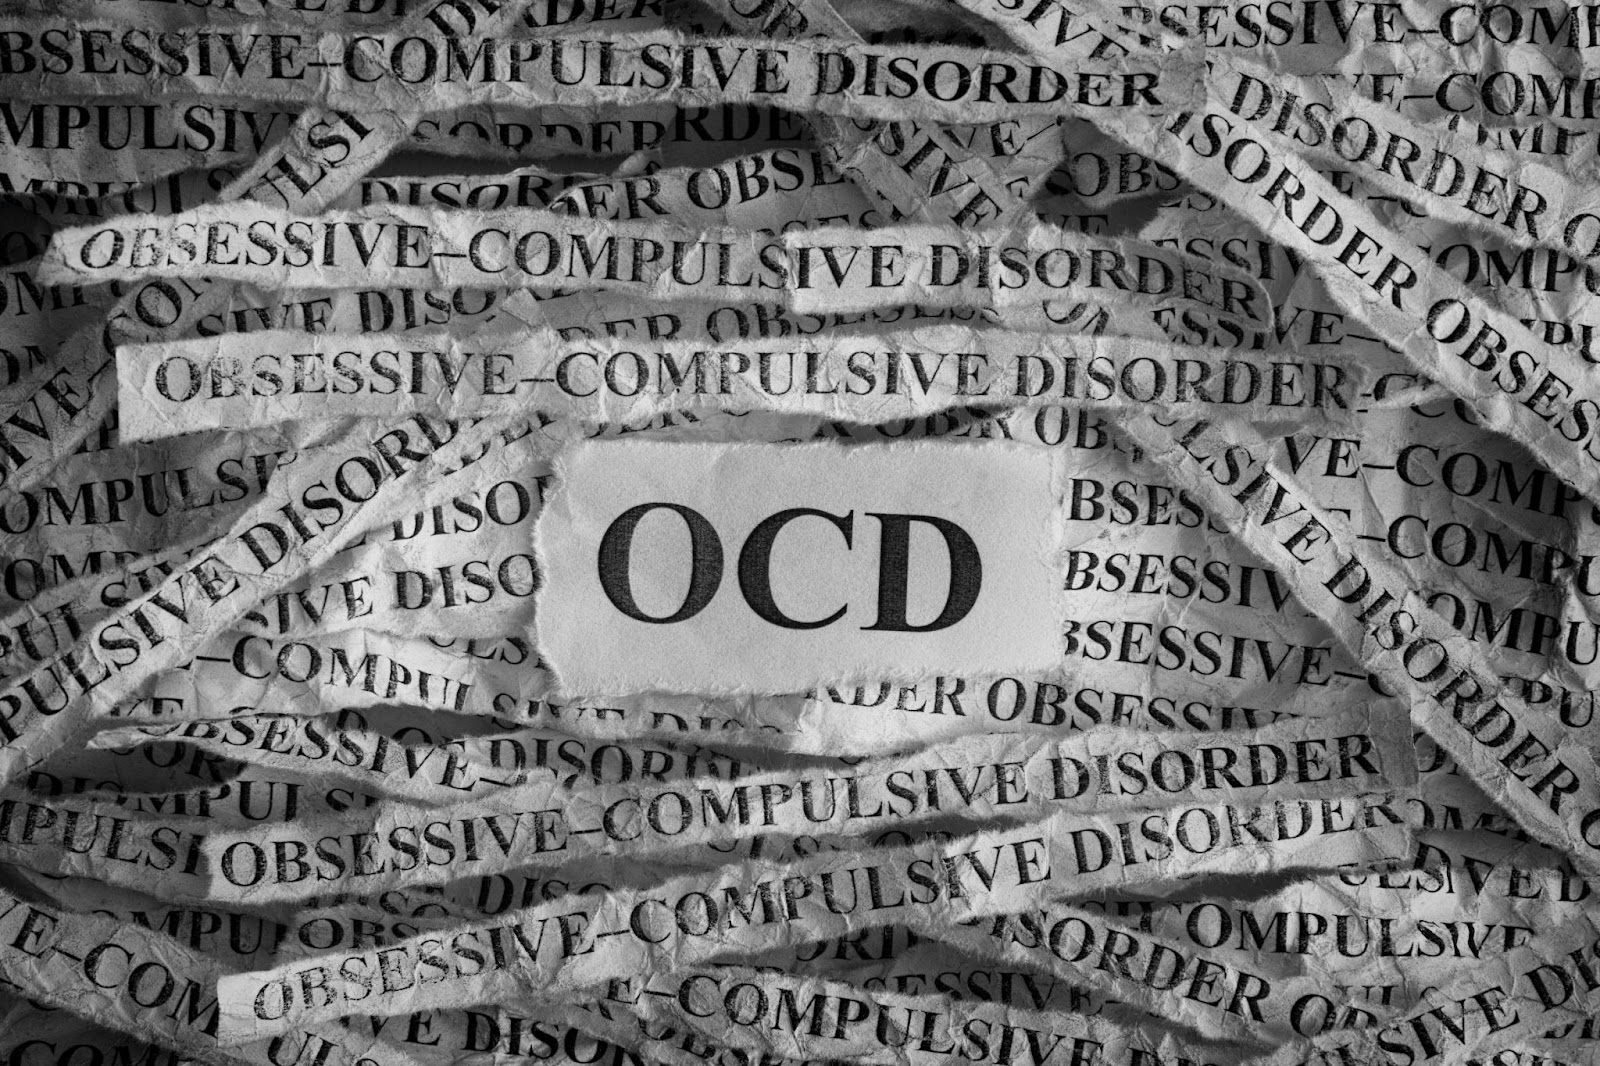 Diagnosing OCD